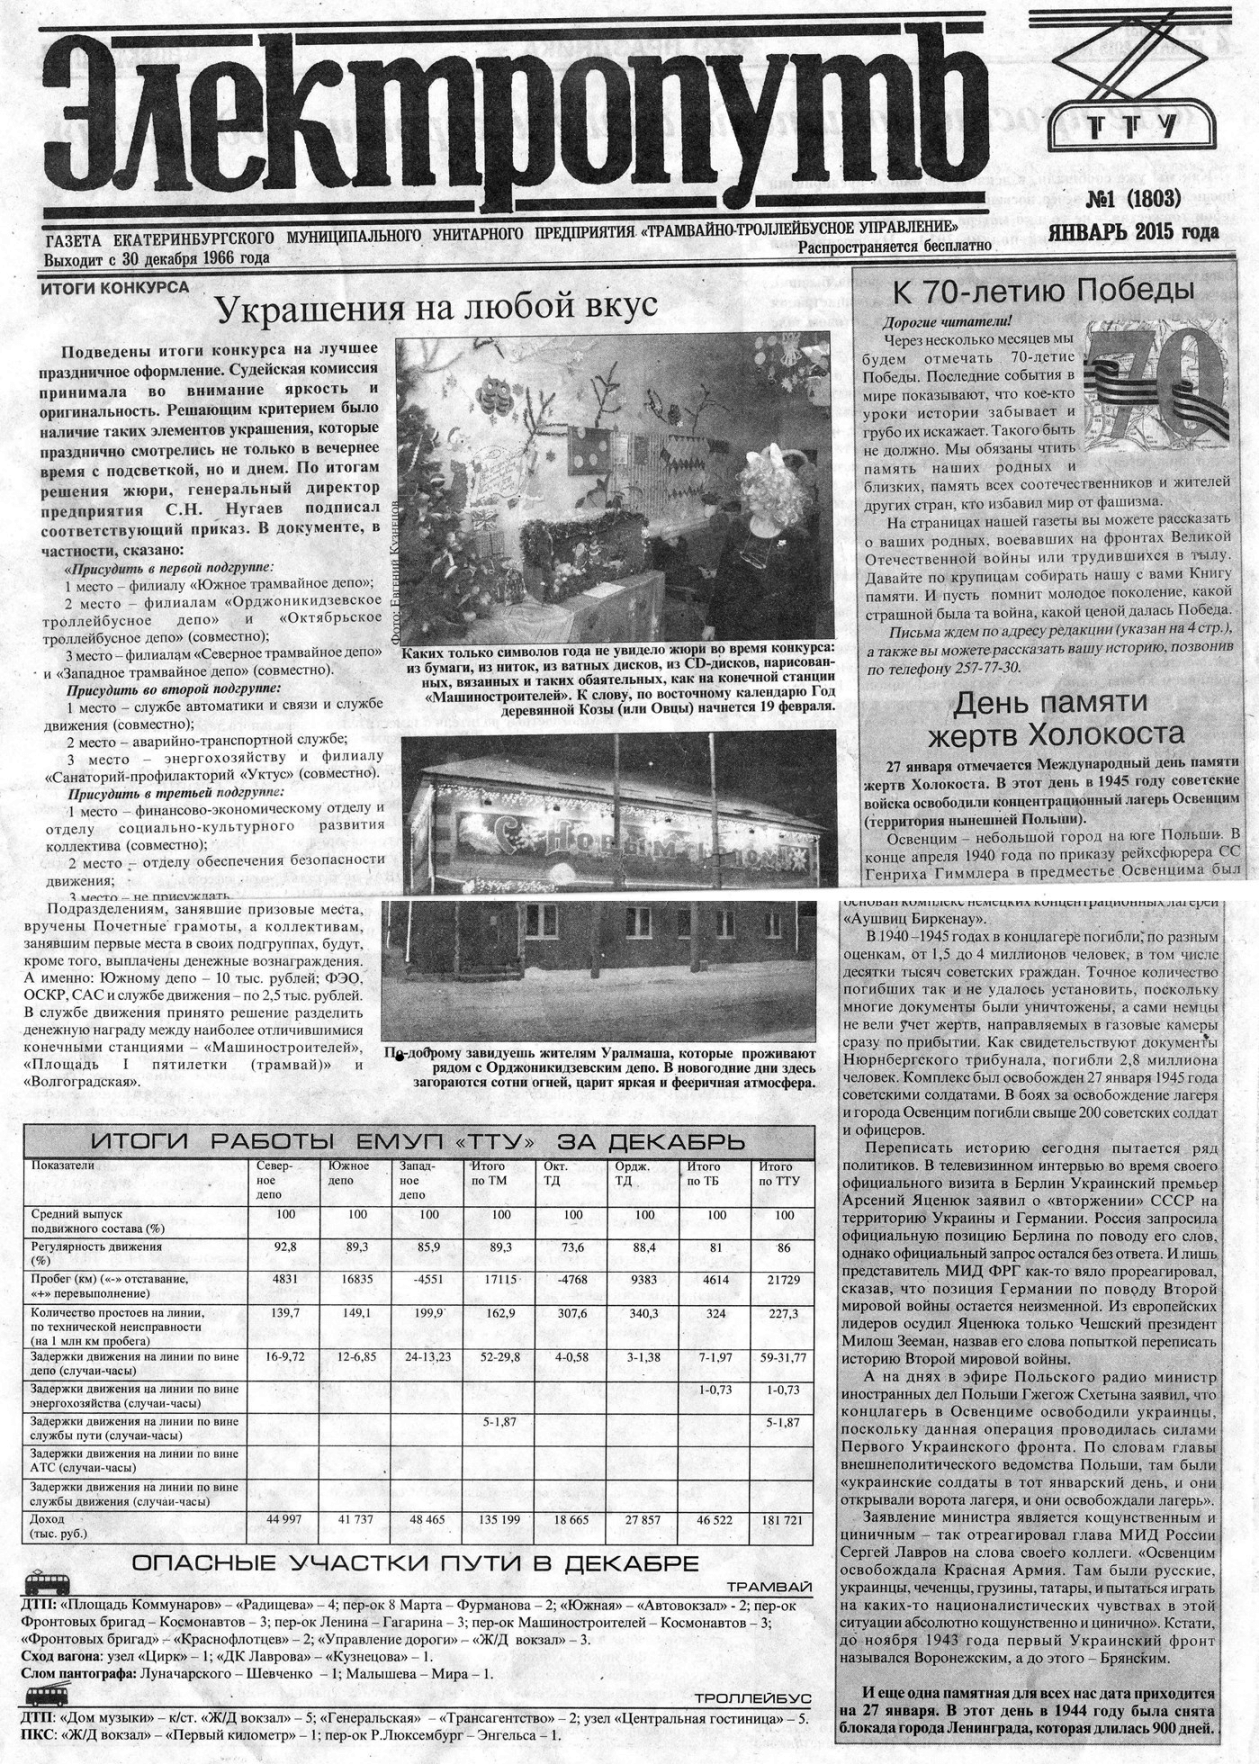 Yekaterinburg — “Electroput” newspaper